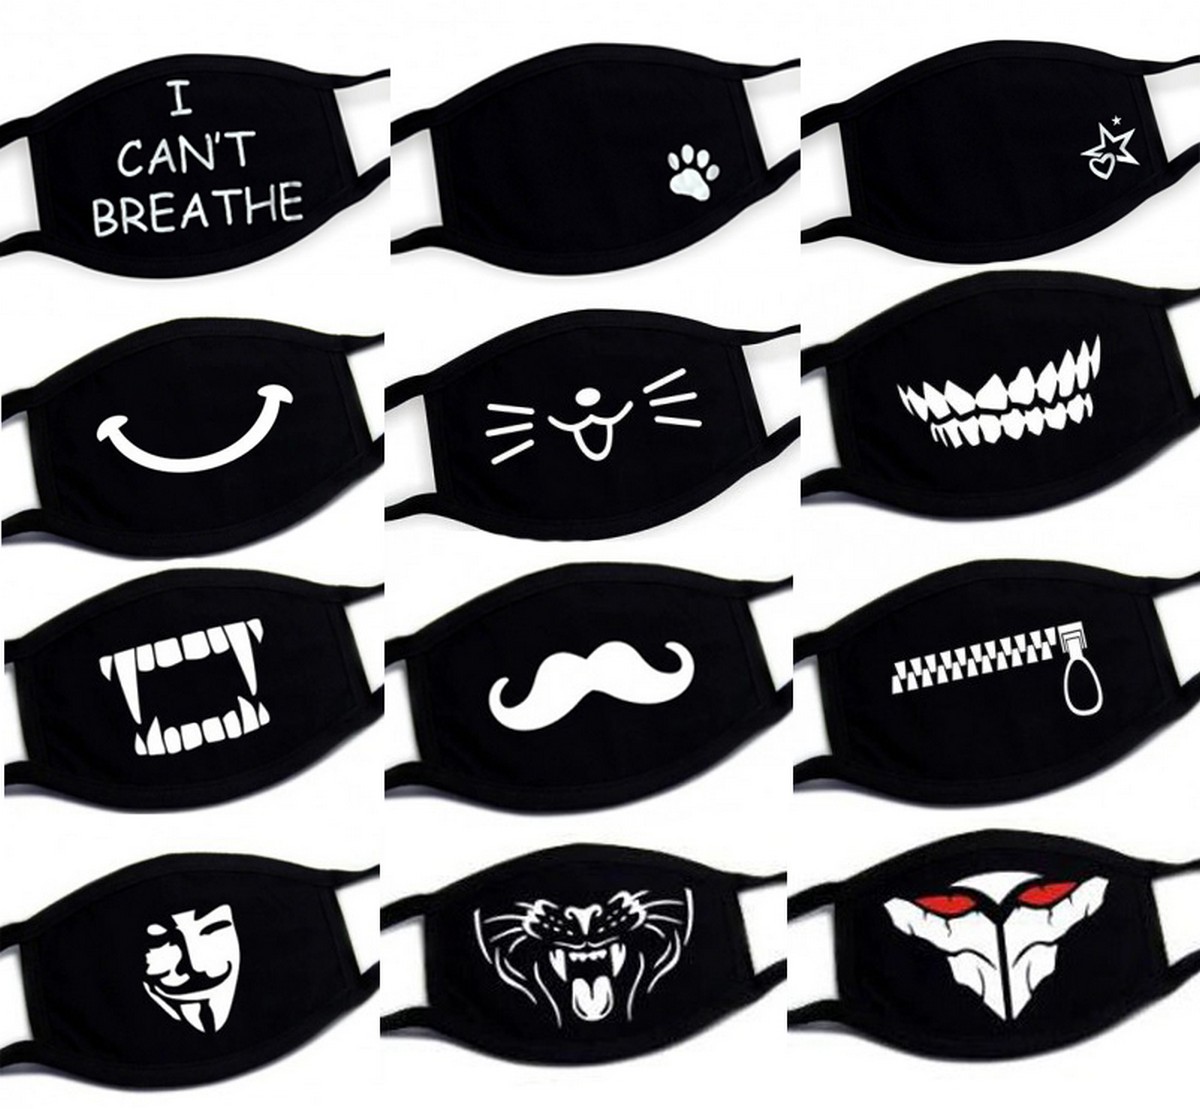 Black Cotton masks with patterns